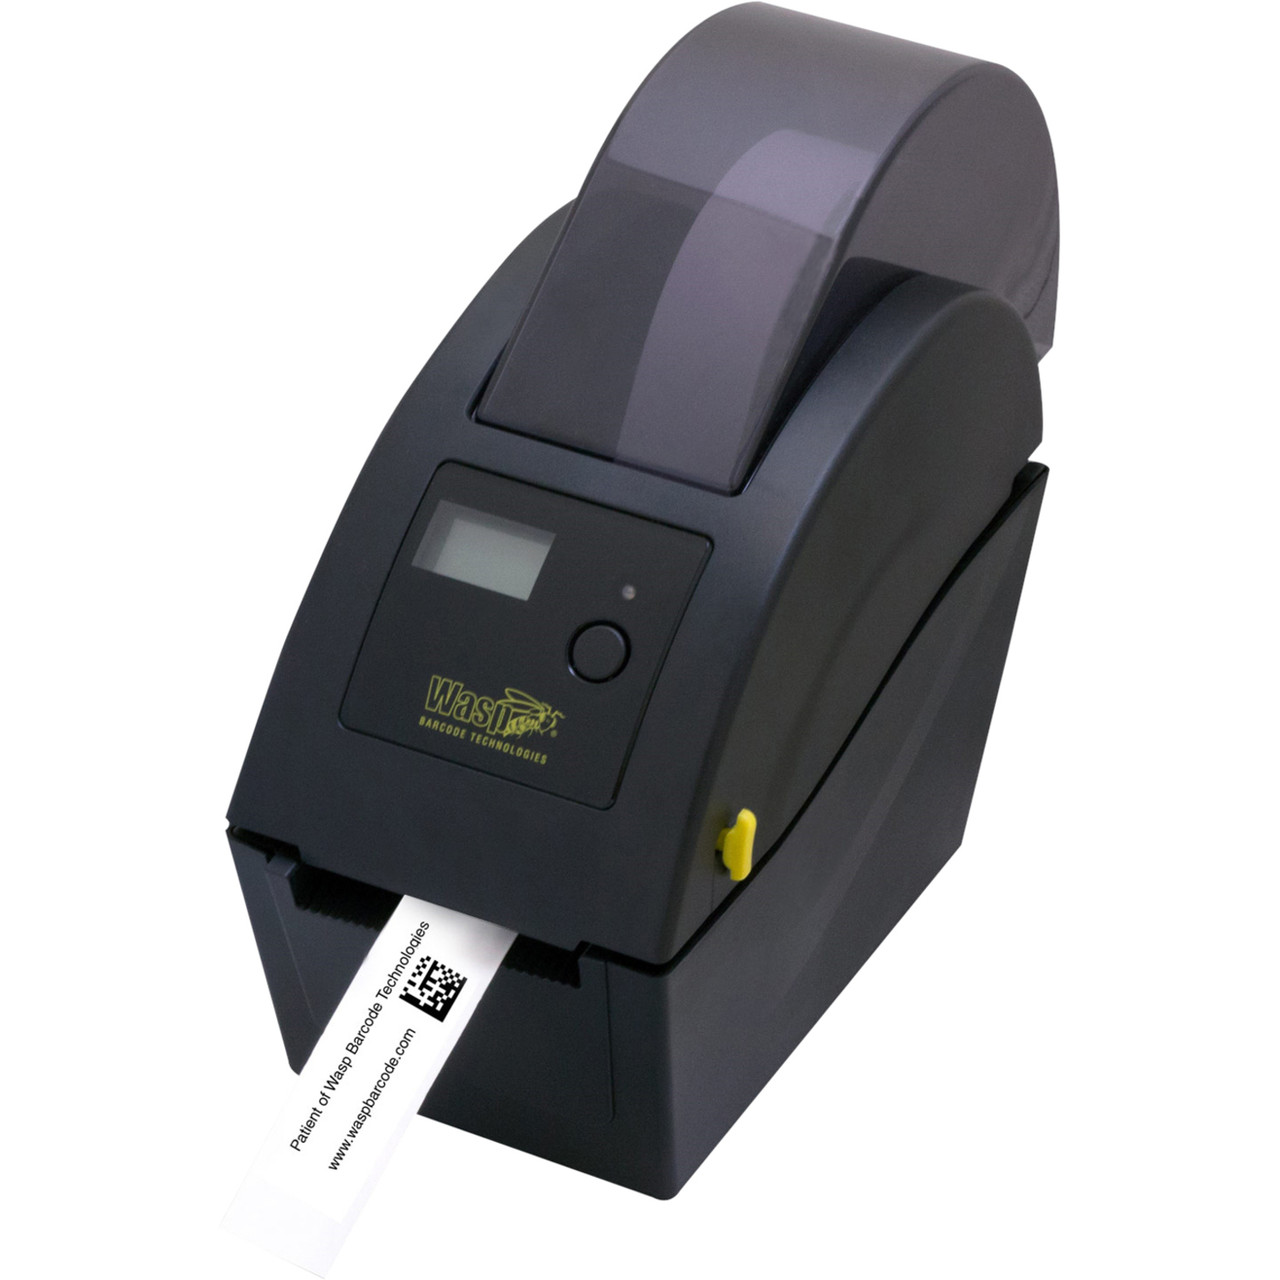 Wasp WHC25 Desktop Direct Thermal Printer - Monochrome - Wristband Print - Ethernet - USB - 633808403911